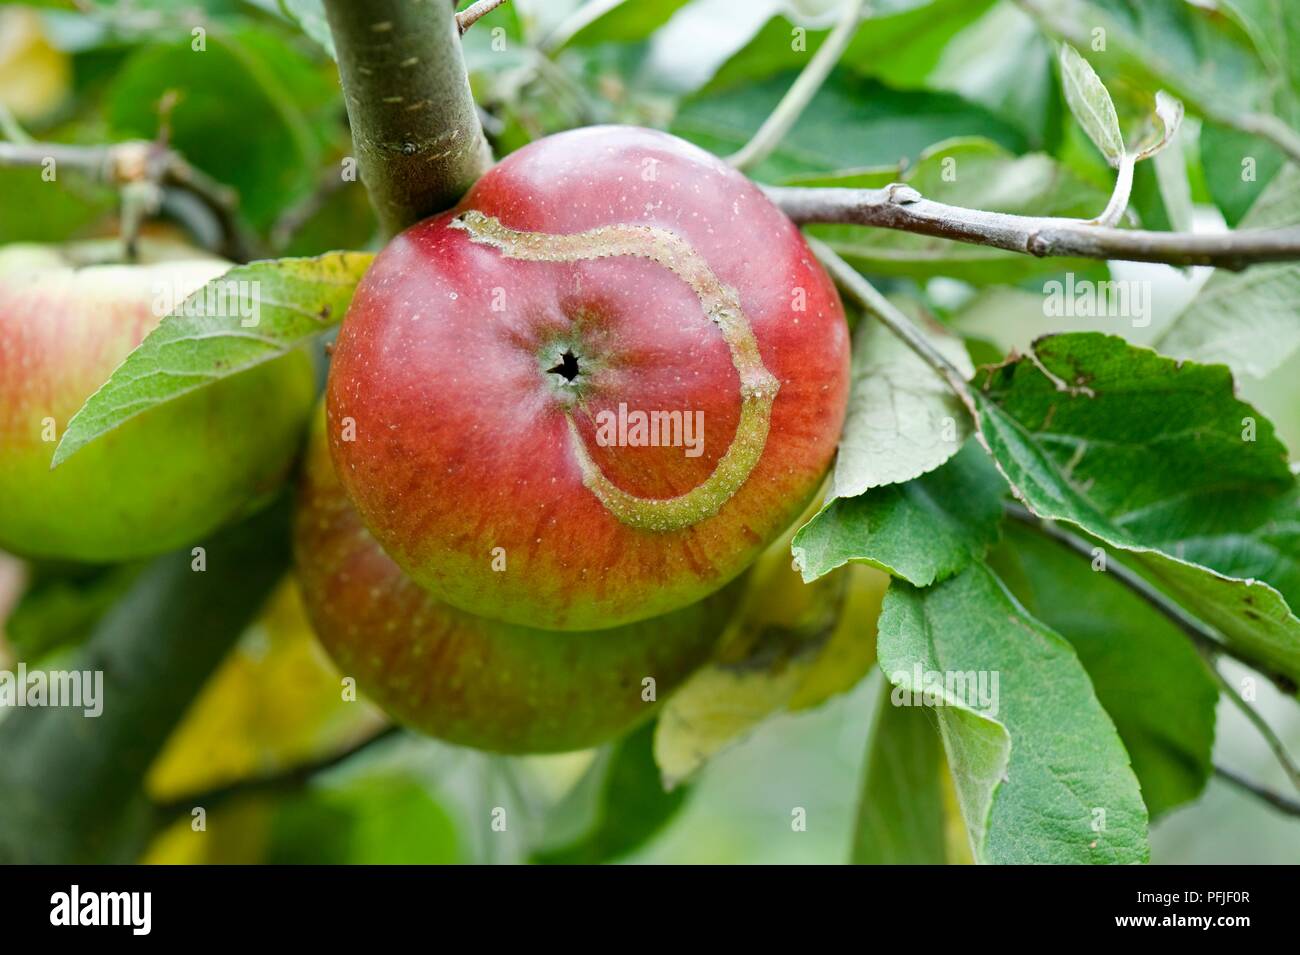 Apple damaged by sawfly, close-up Stock Photo